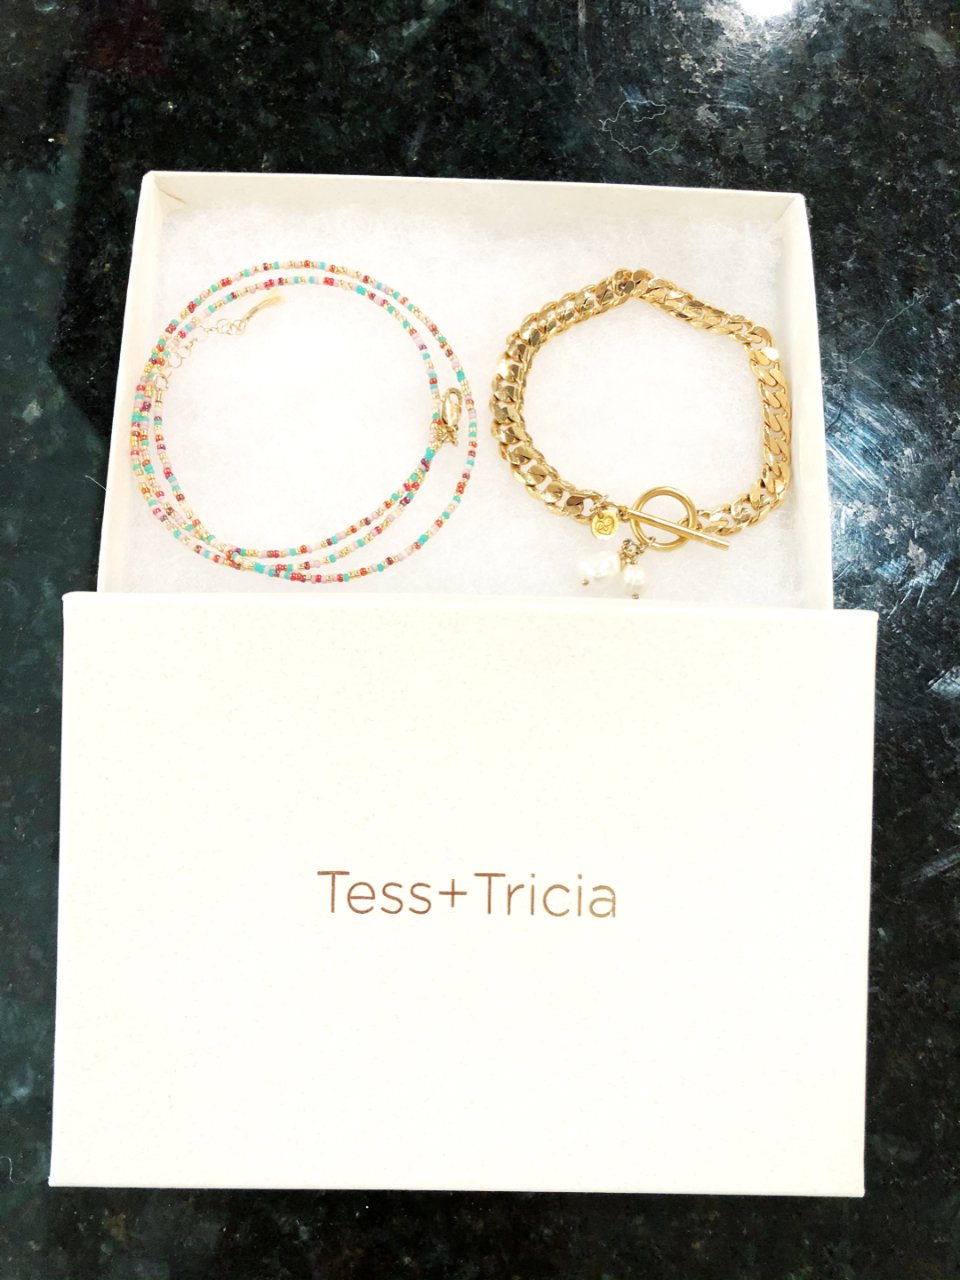 Tess + Tricia